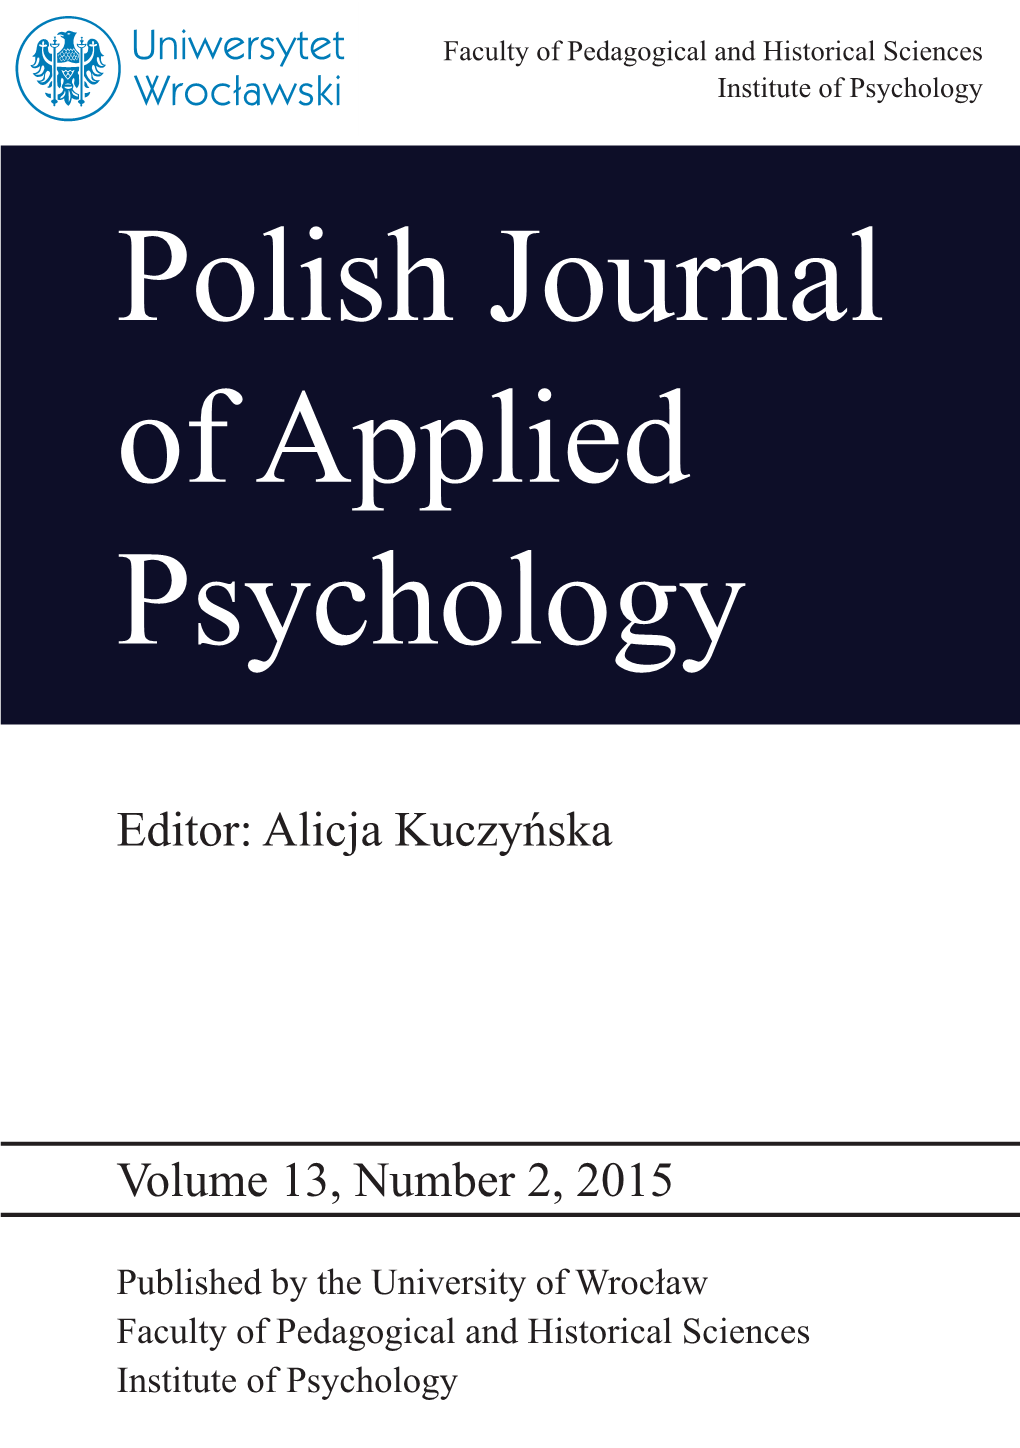 Polish Journal of Applied Psychology. Volume 13, Number 2, 2015